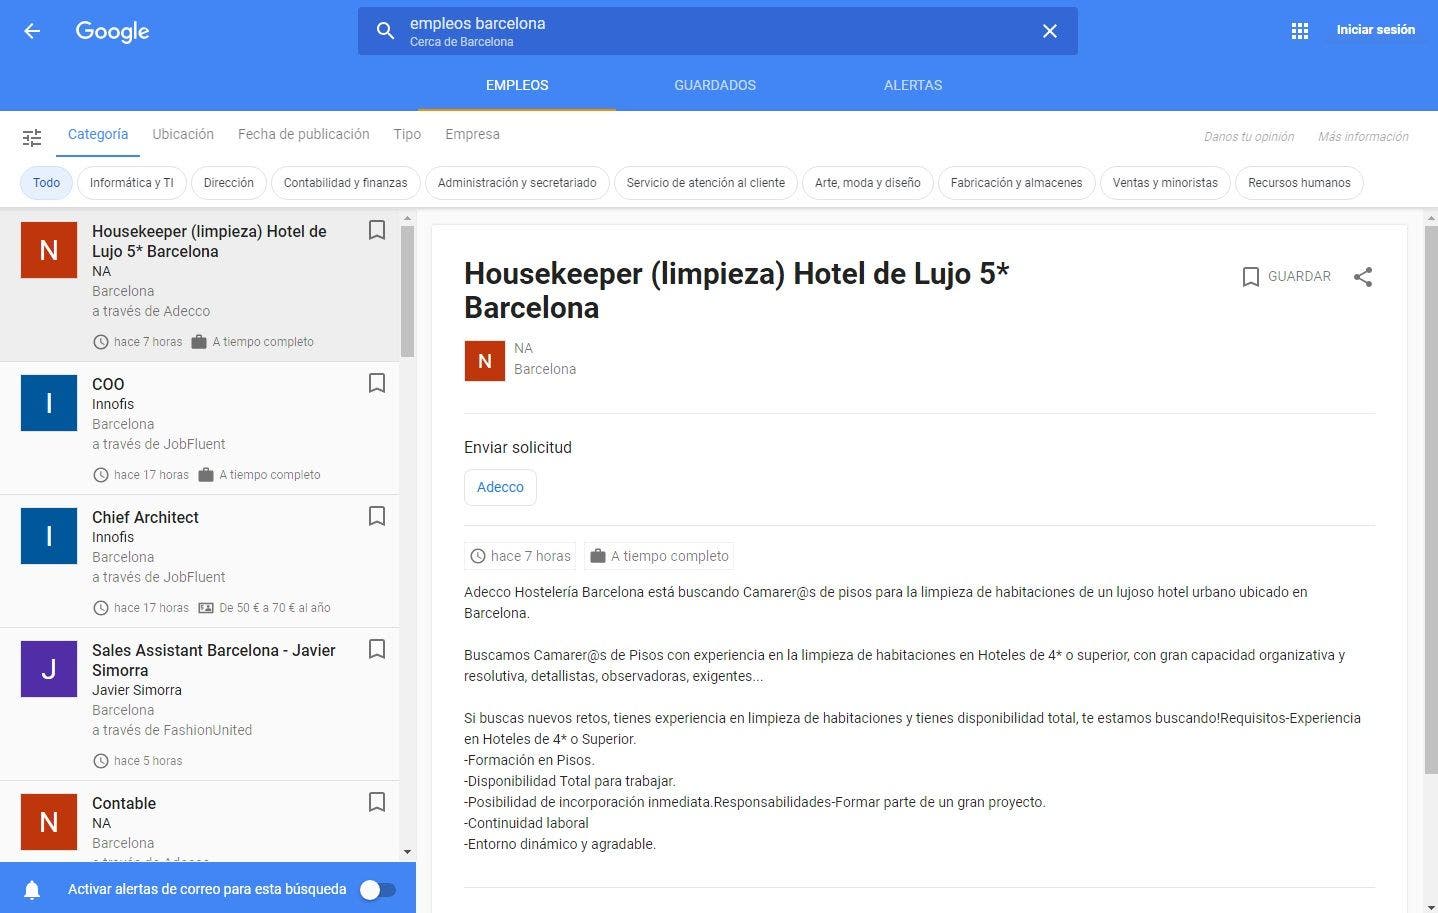 Así se ve la plataforma de Google para buscar empleo en Barcelona. Foto: Google/ED